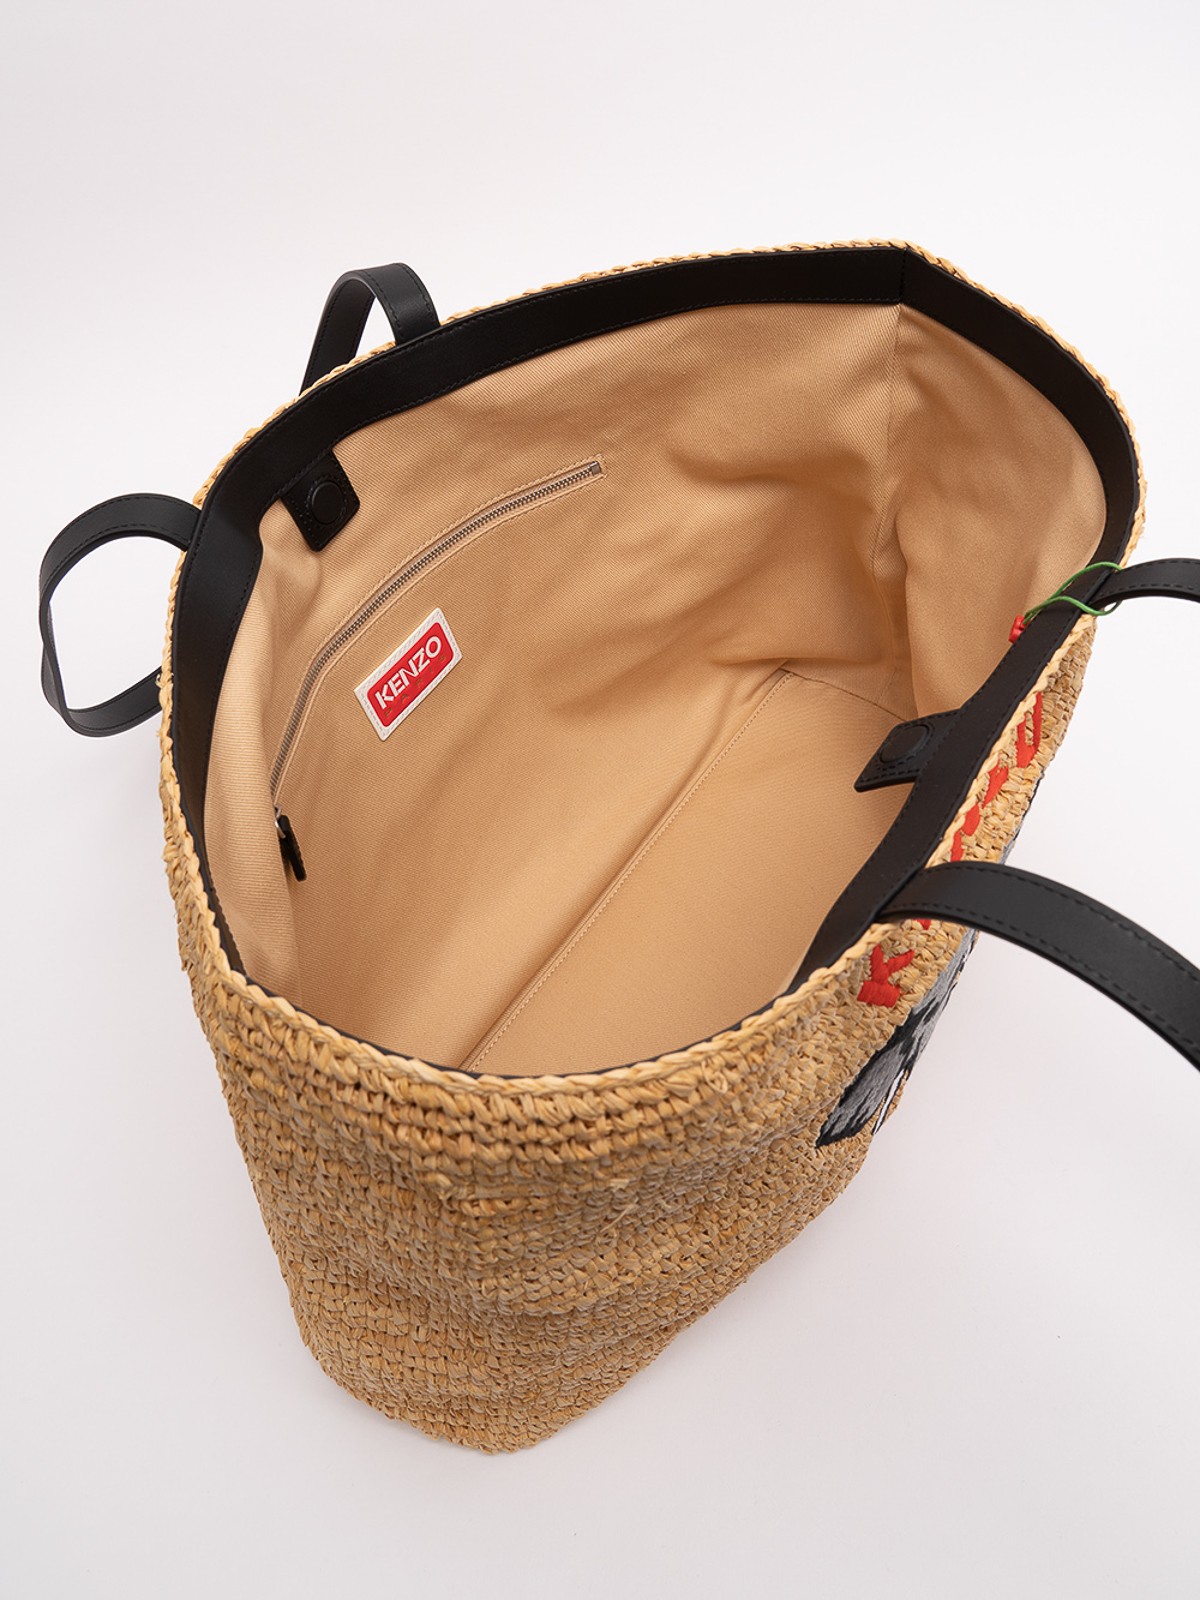 Totes bags Kenzo - Raffia tote - FD52SA561F0299A | Shop online at 